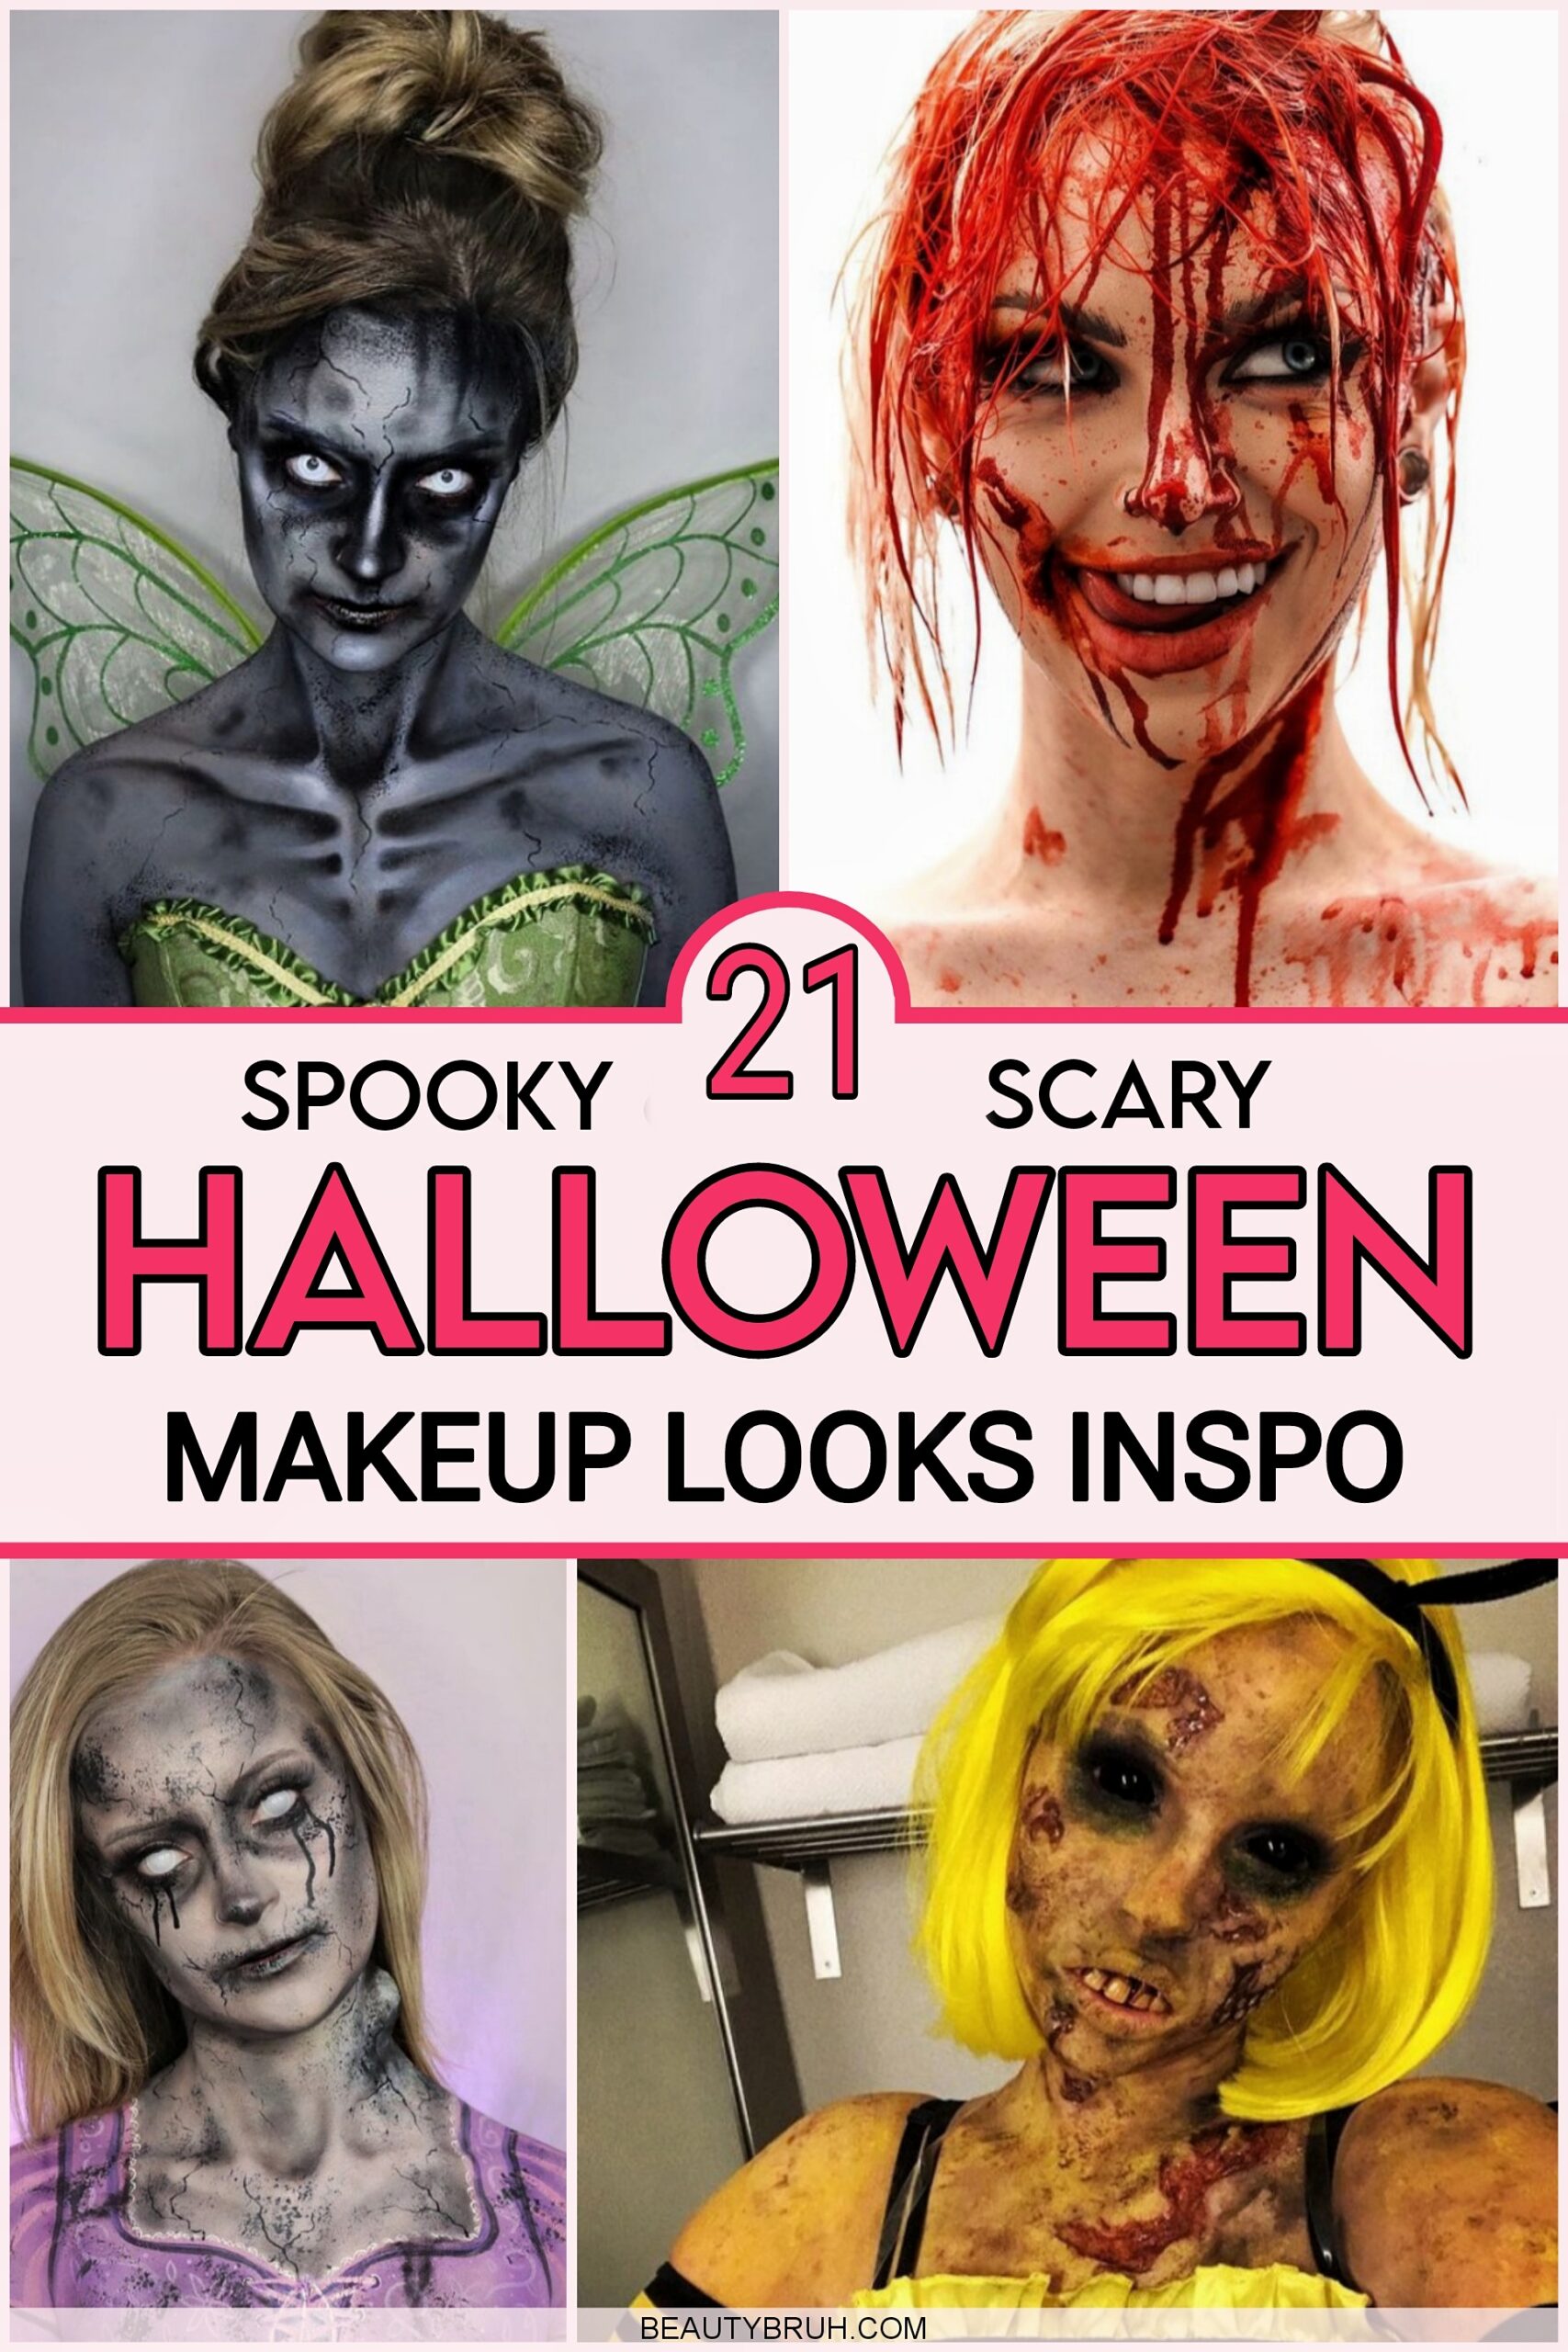 Spooky Scary Halloween Makeup Looks Inspo